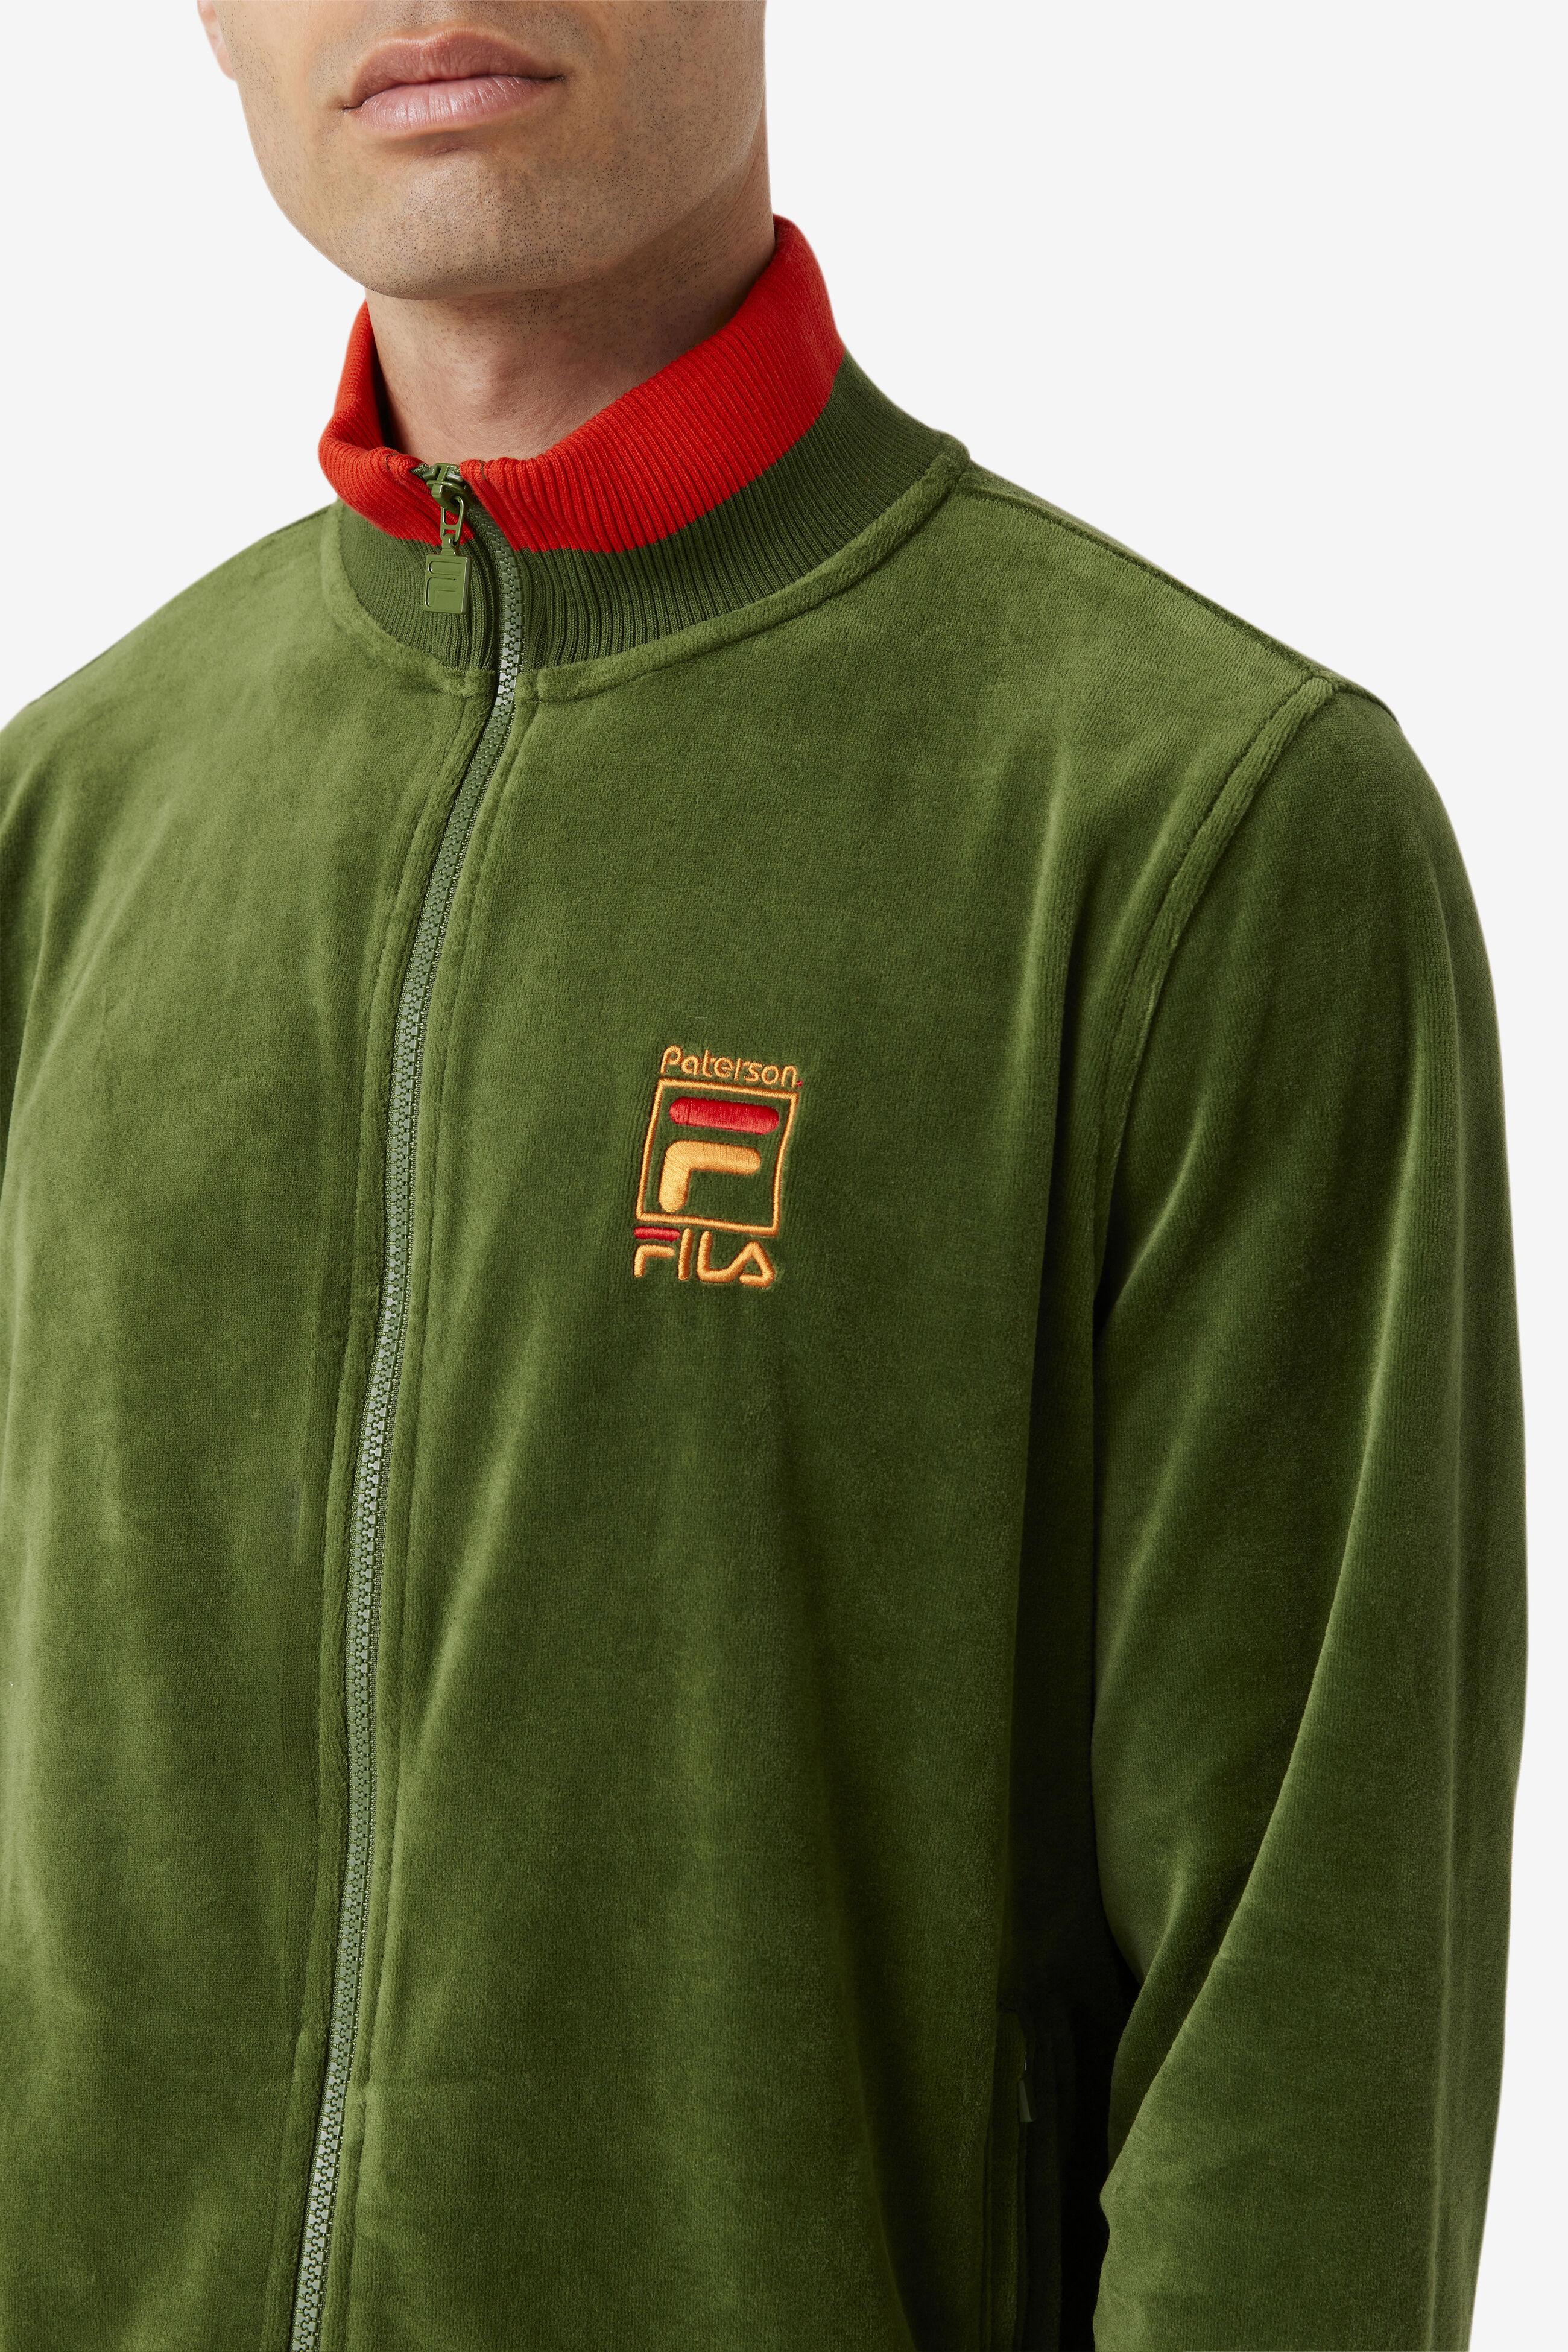 Fila X Paterson Velour Jacket in Green for Men | Lyst